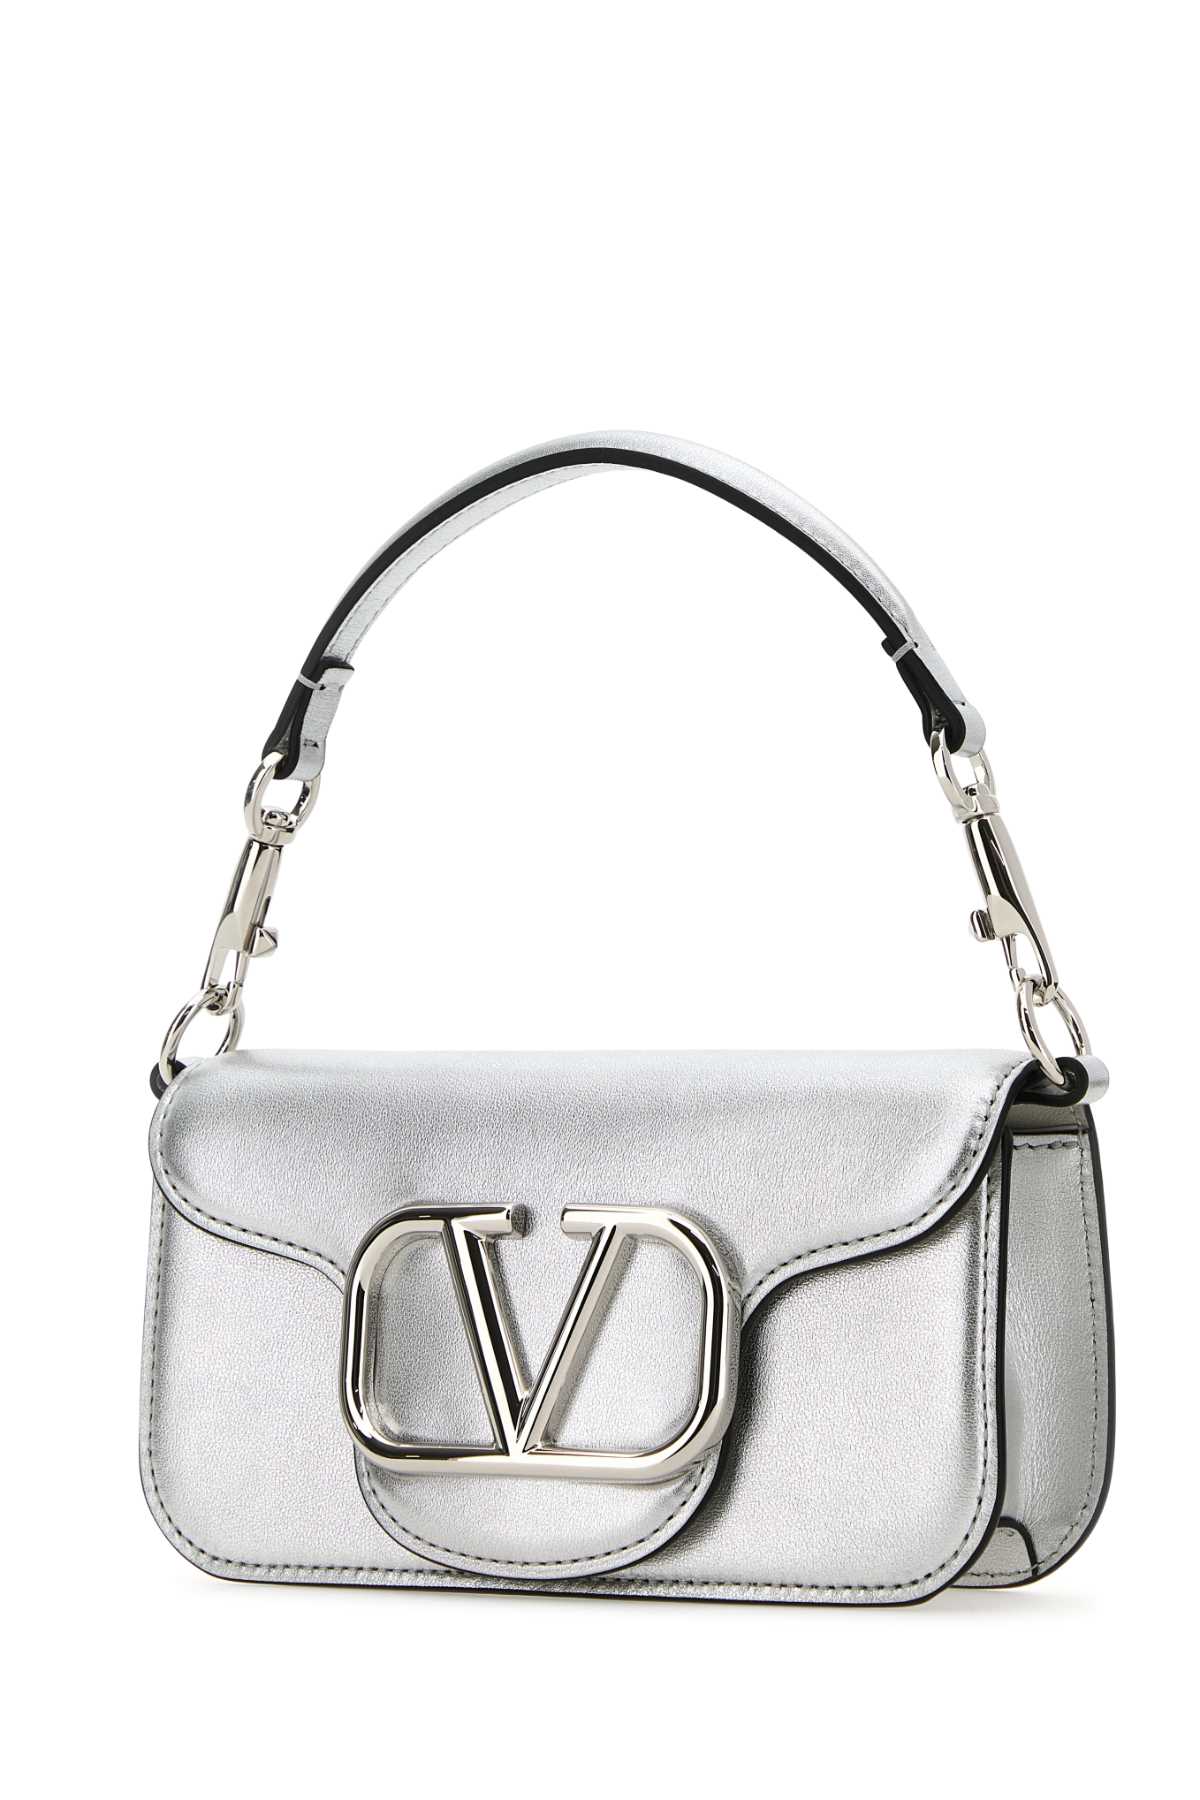 Valentino Garavani Silver Leather Locã² Handbag